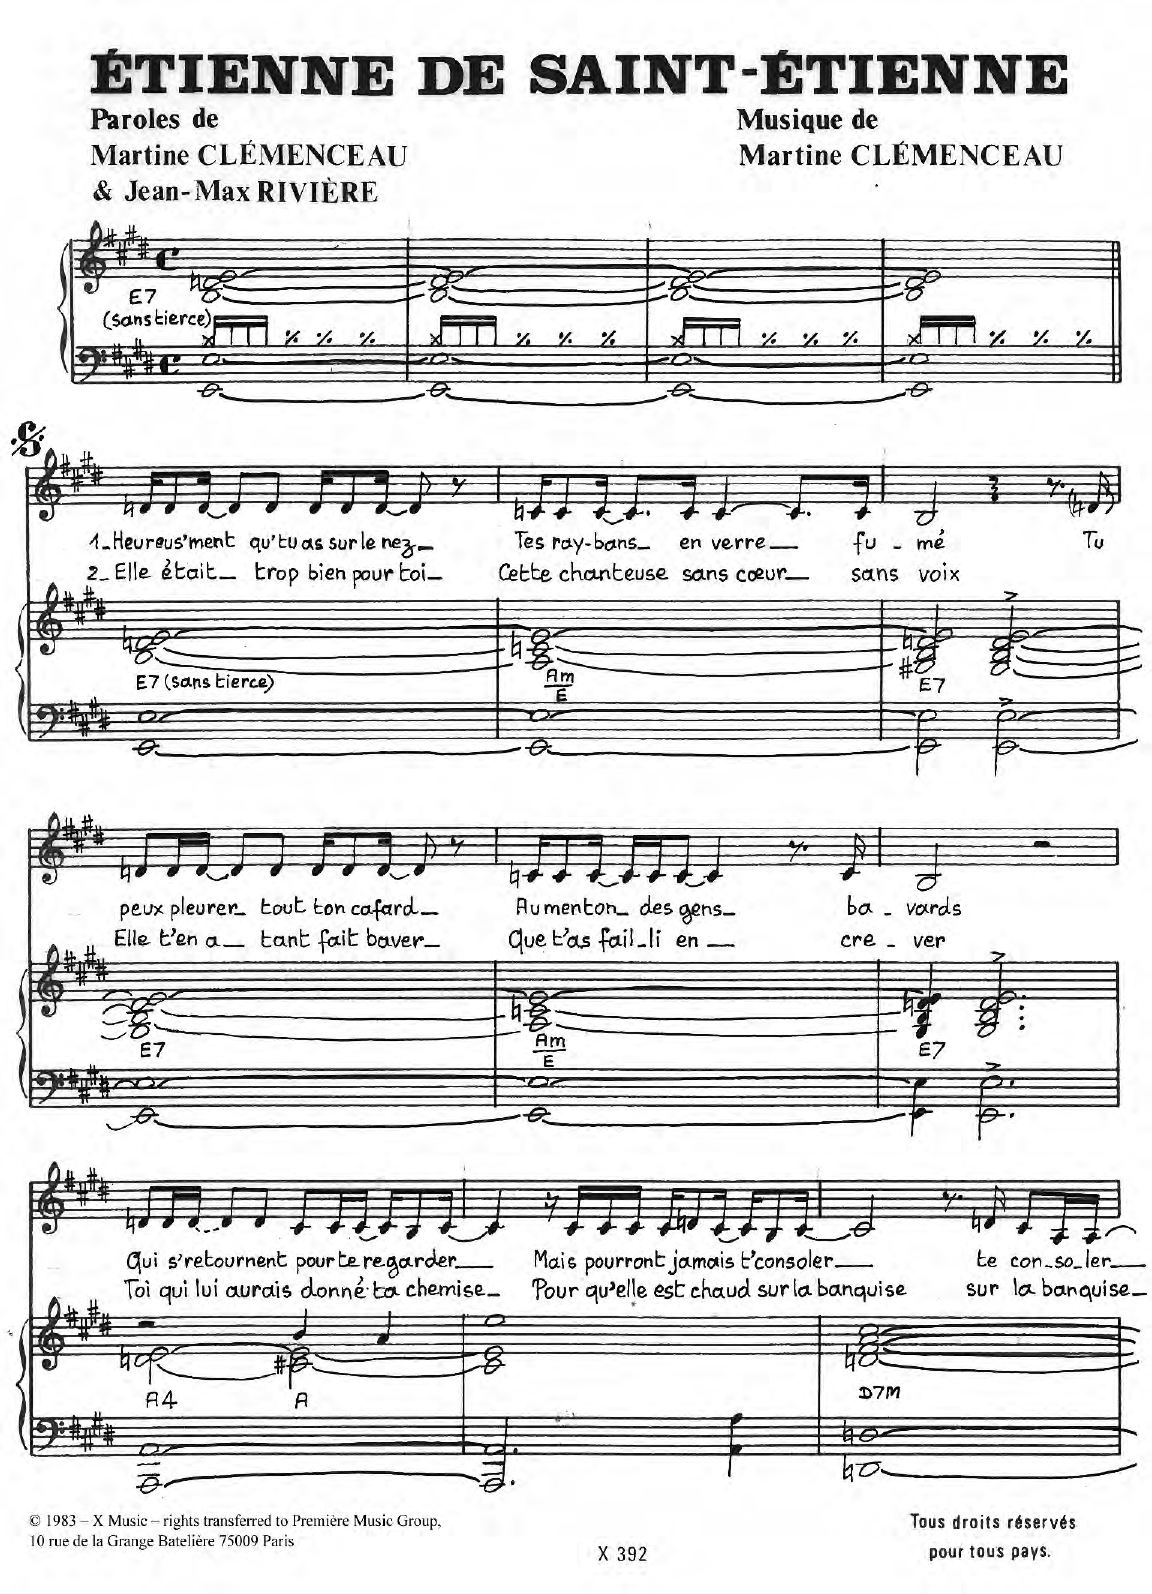 Martine Clemenceau Etienne De Saint-Etienne Sheet Music Notes & Chords for Piano & Vocal - Download or Print PDF